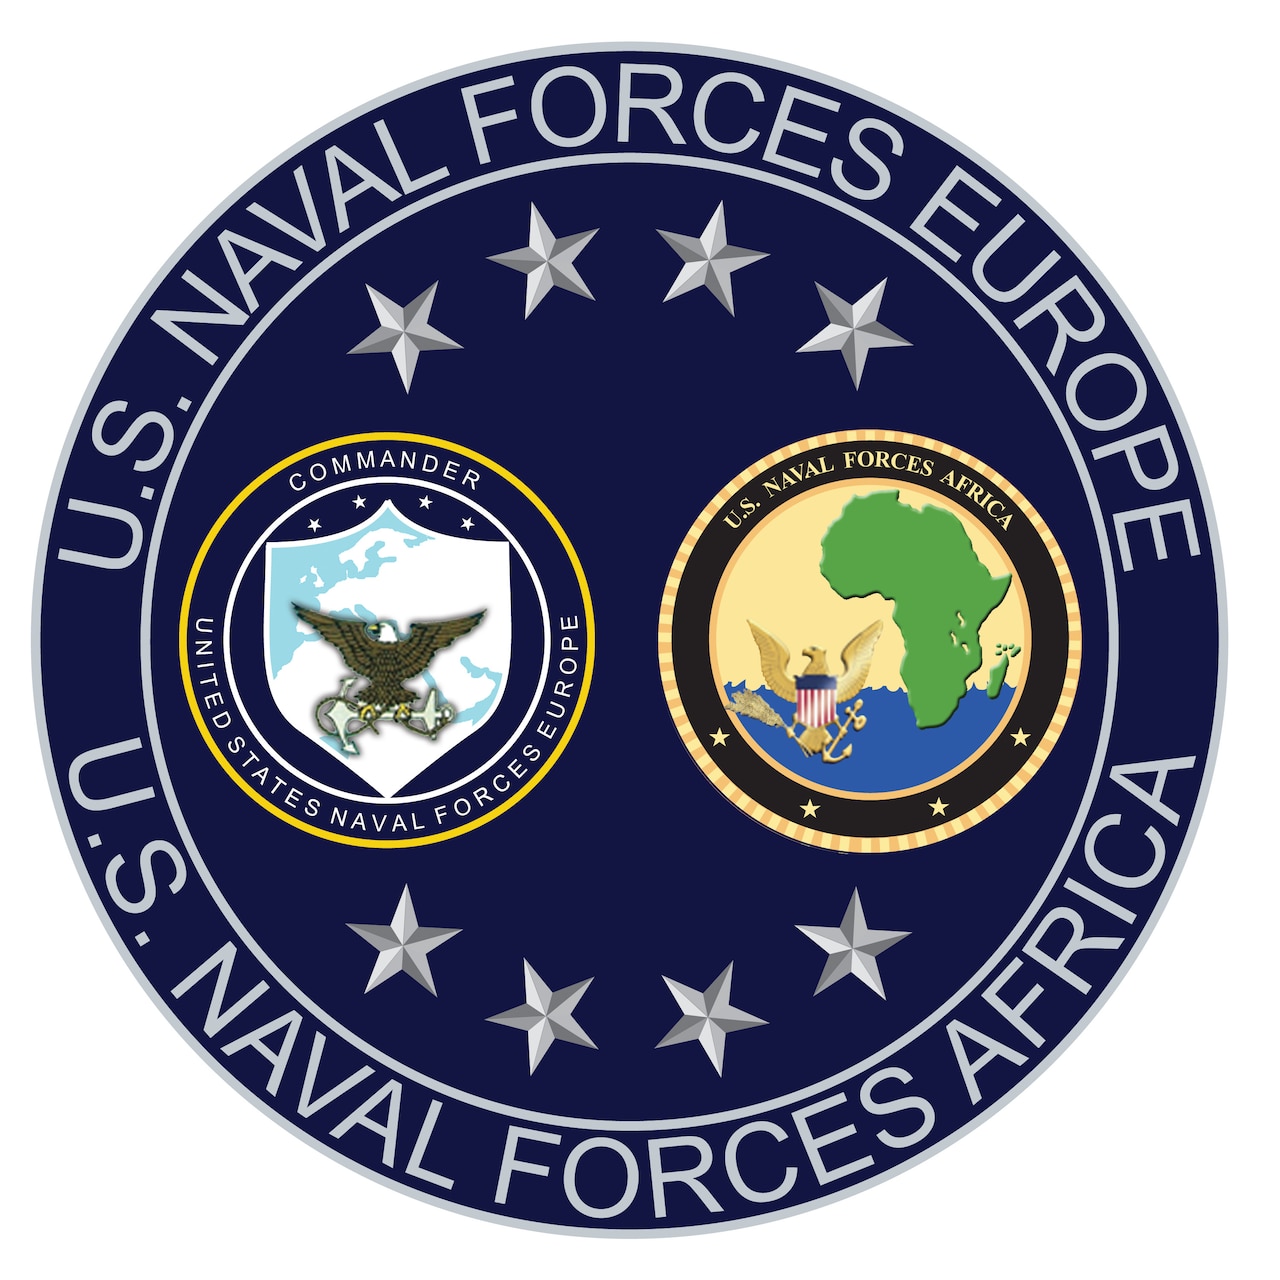 www.c6f.navy.mil